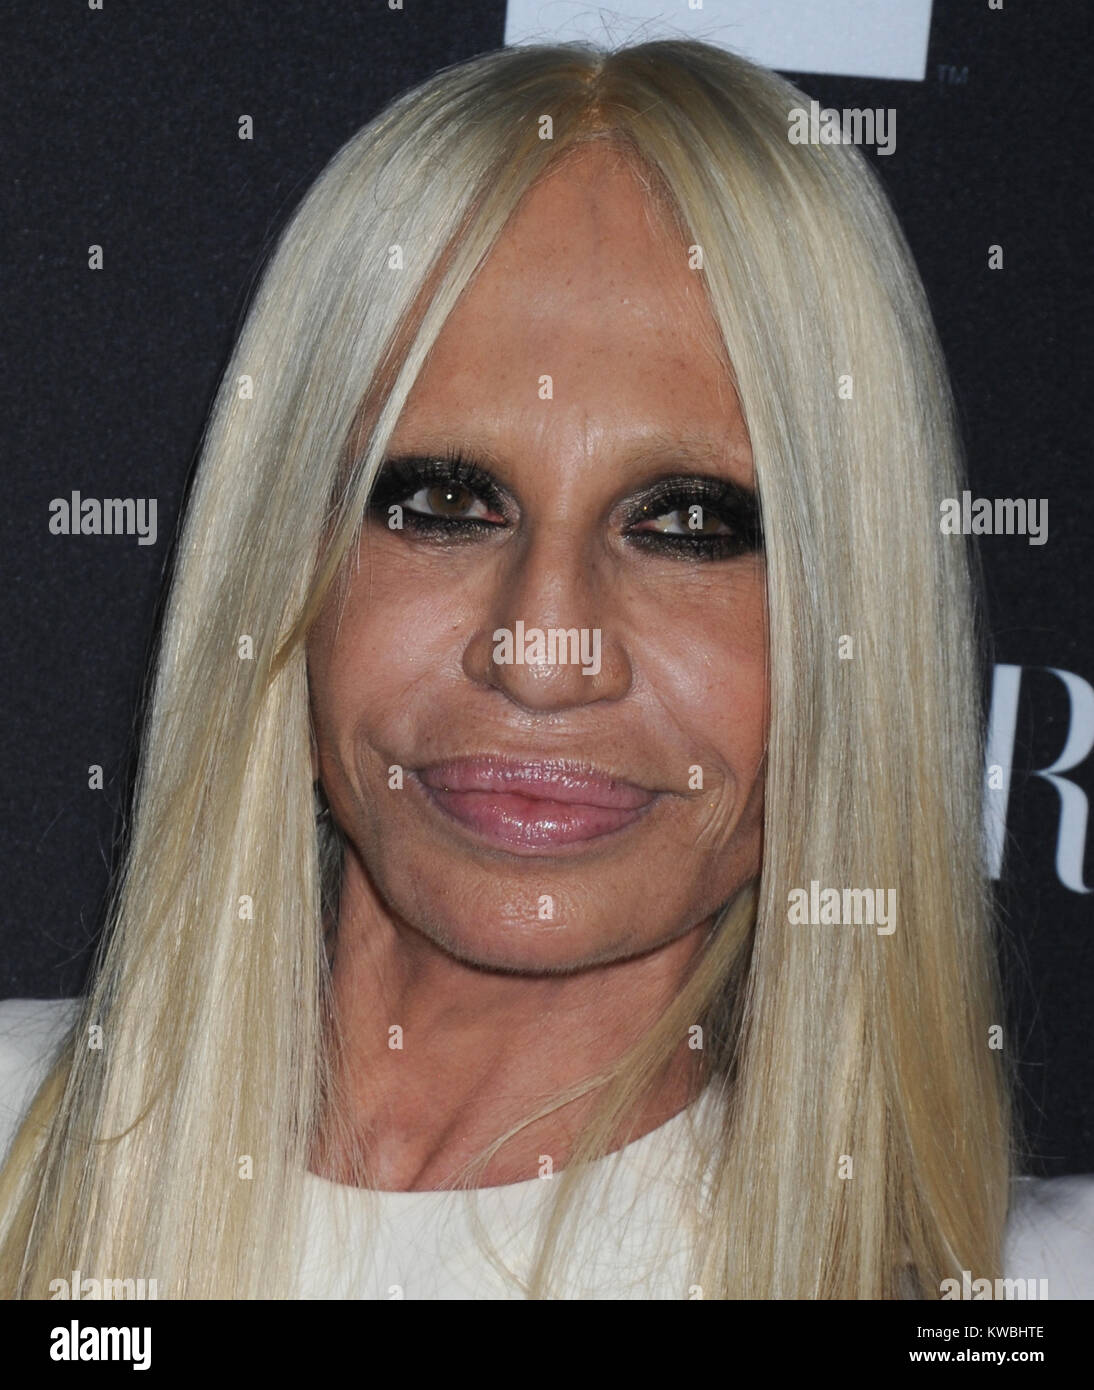 NEW YORK, NY - SEPTEMBER 05: Donatella Versace attends the Harper's ...